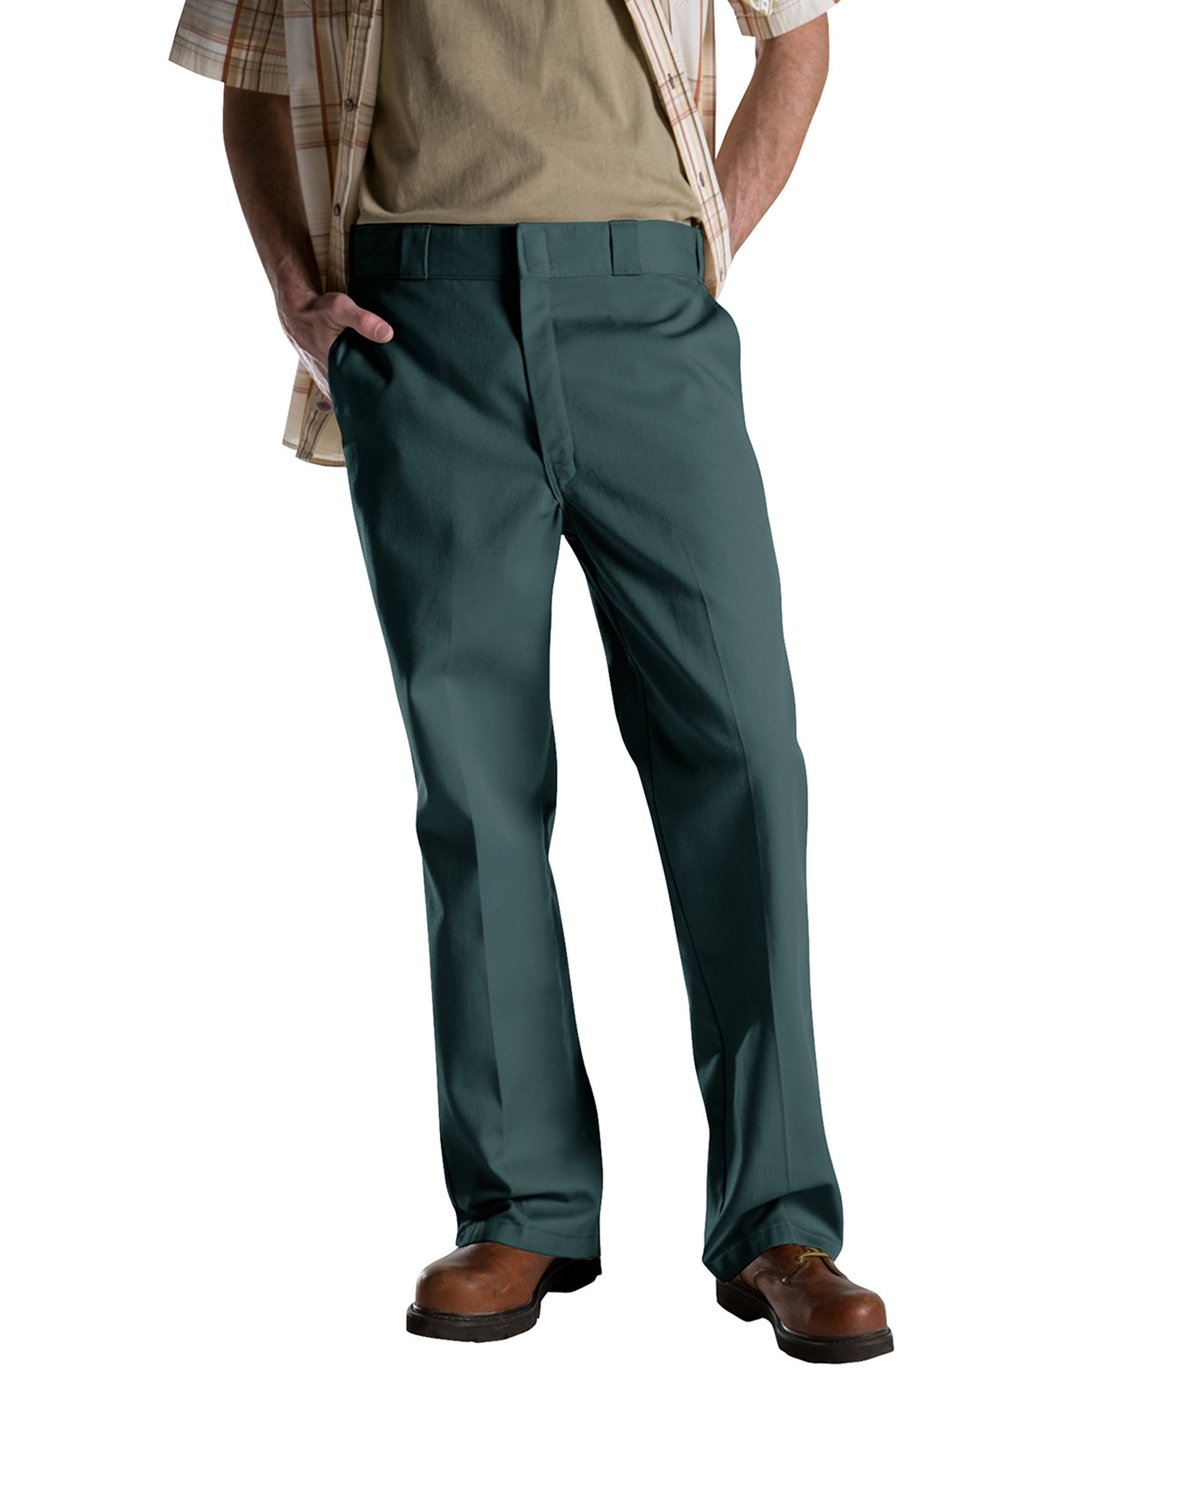 Men's Work Pants for Men Cargo Trousers Casual Long Cargo Pants 8 colors |  Wish